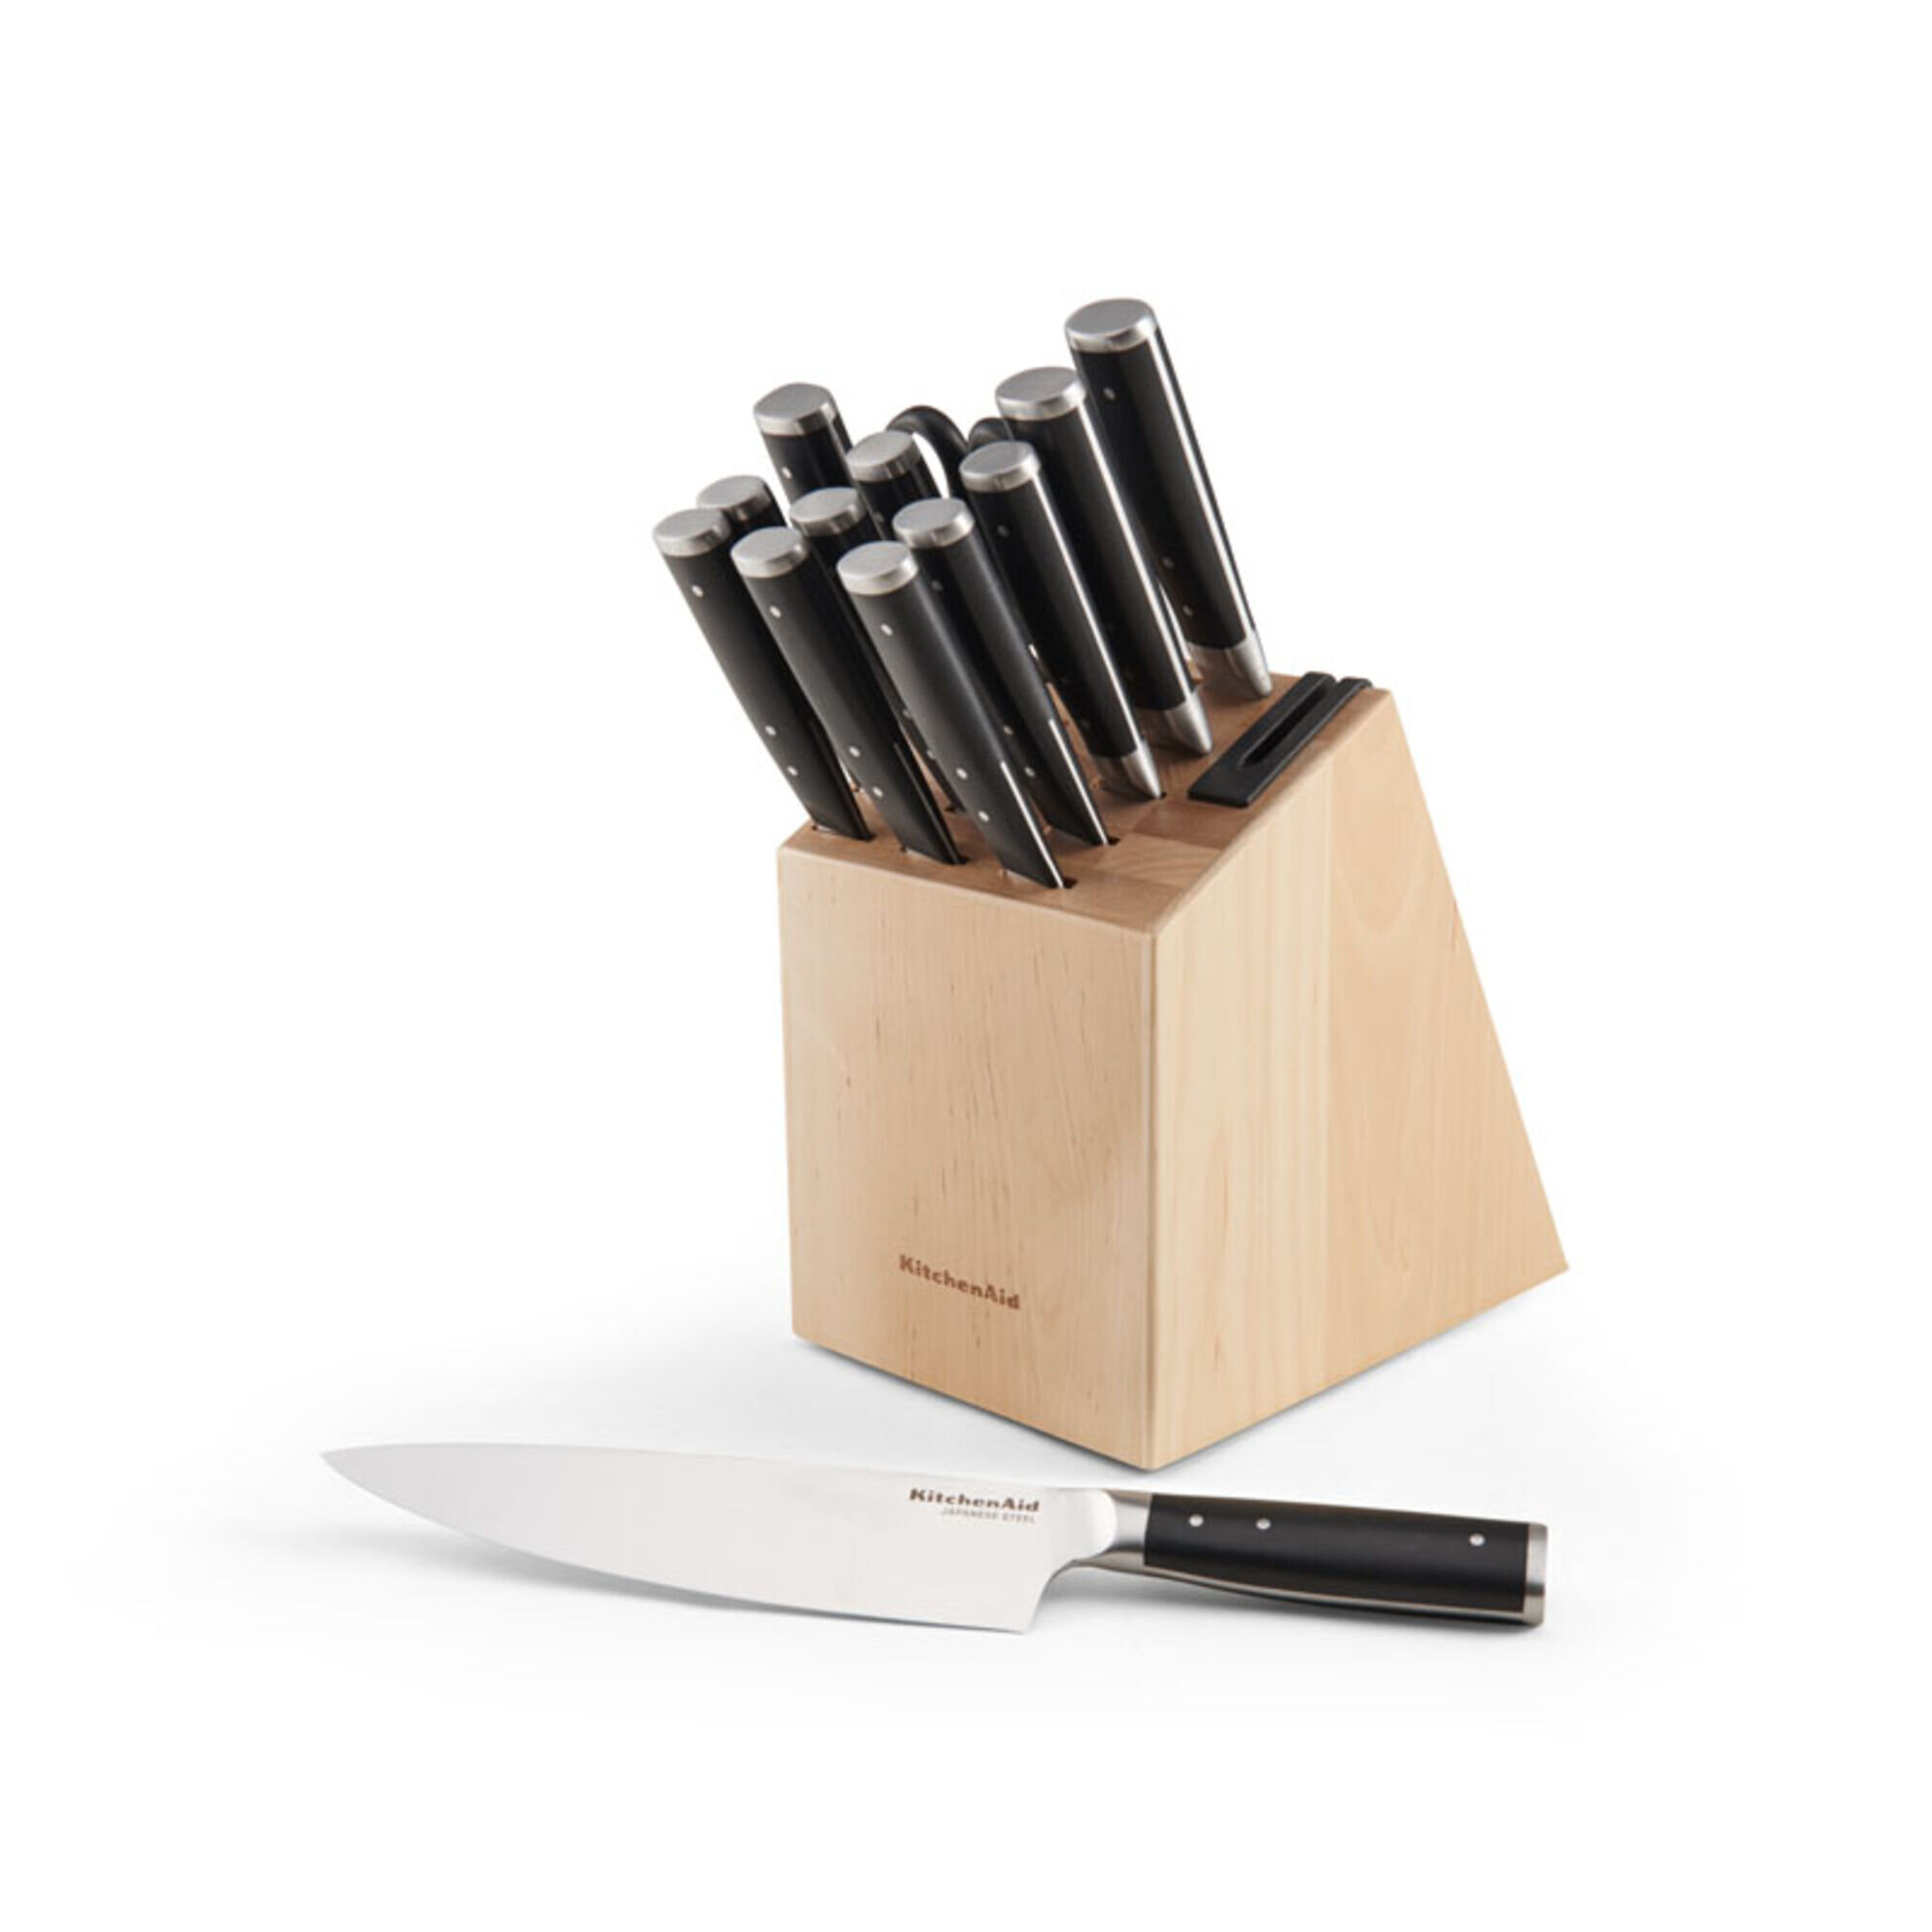 KitchenAid Professional Series Cutlery Sets